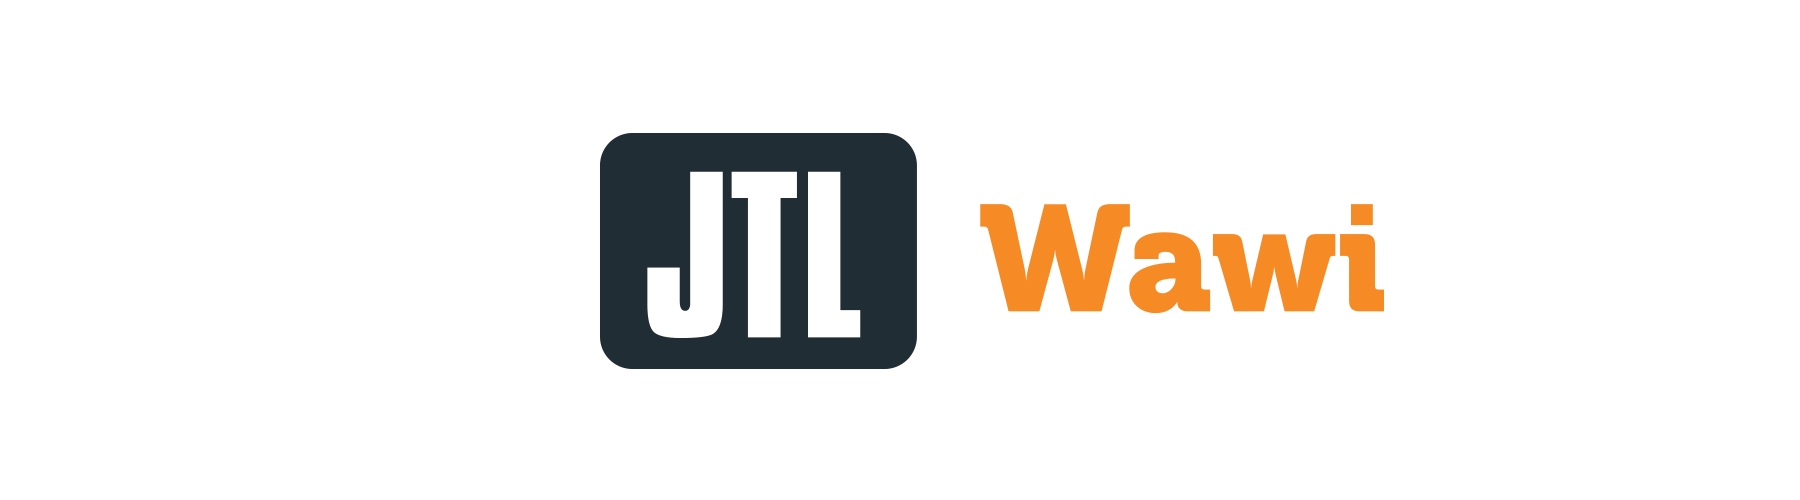 Unser Fazit aus 8 Monaten Beta-Test JTL-Wawi